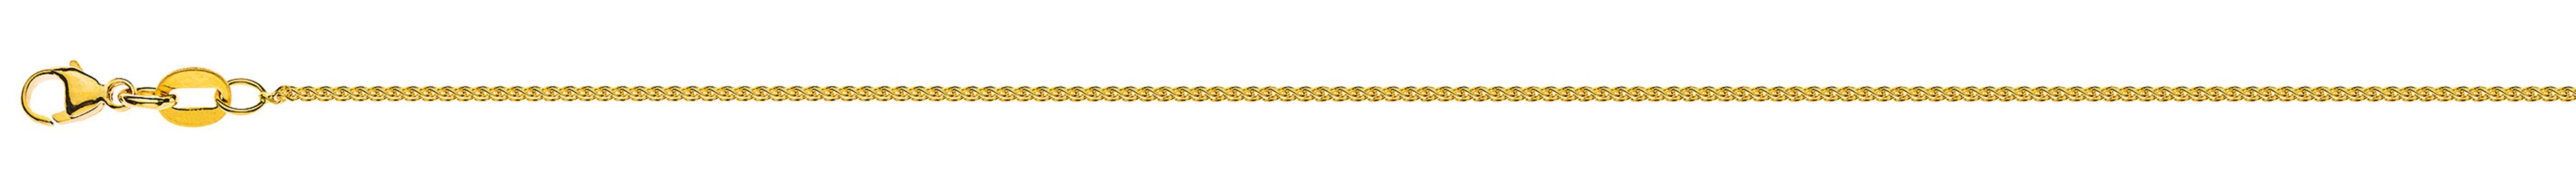 AURONOS Prestige Necklace yellow gold 18K cable chain 42cm 1.0mm